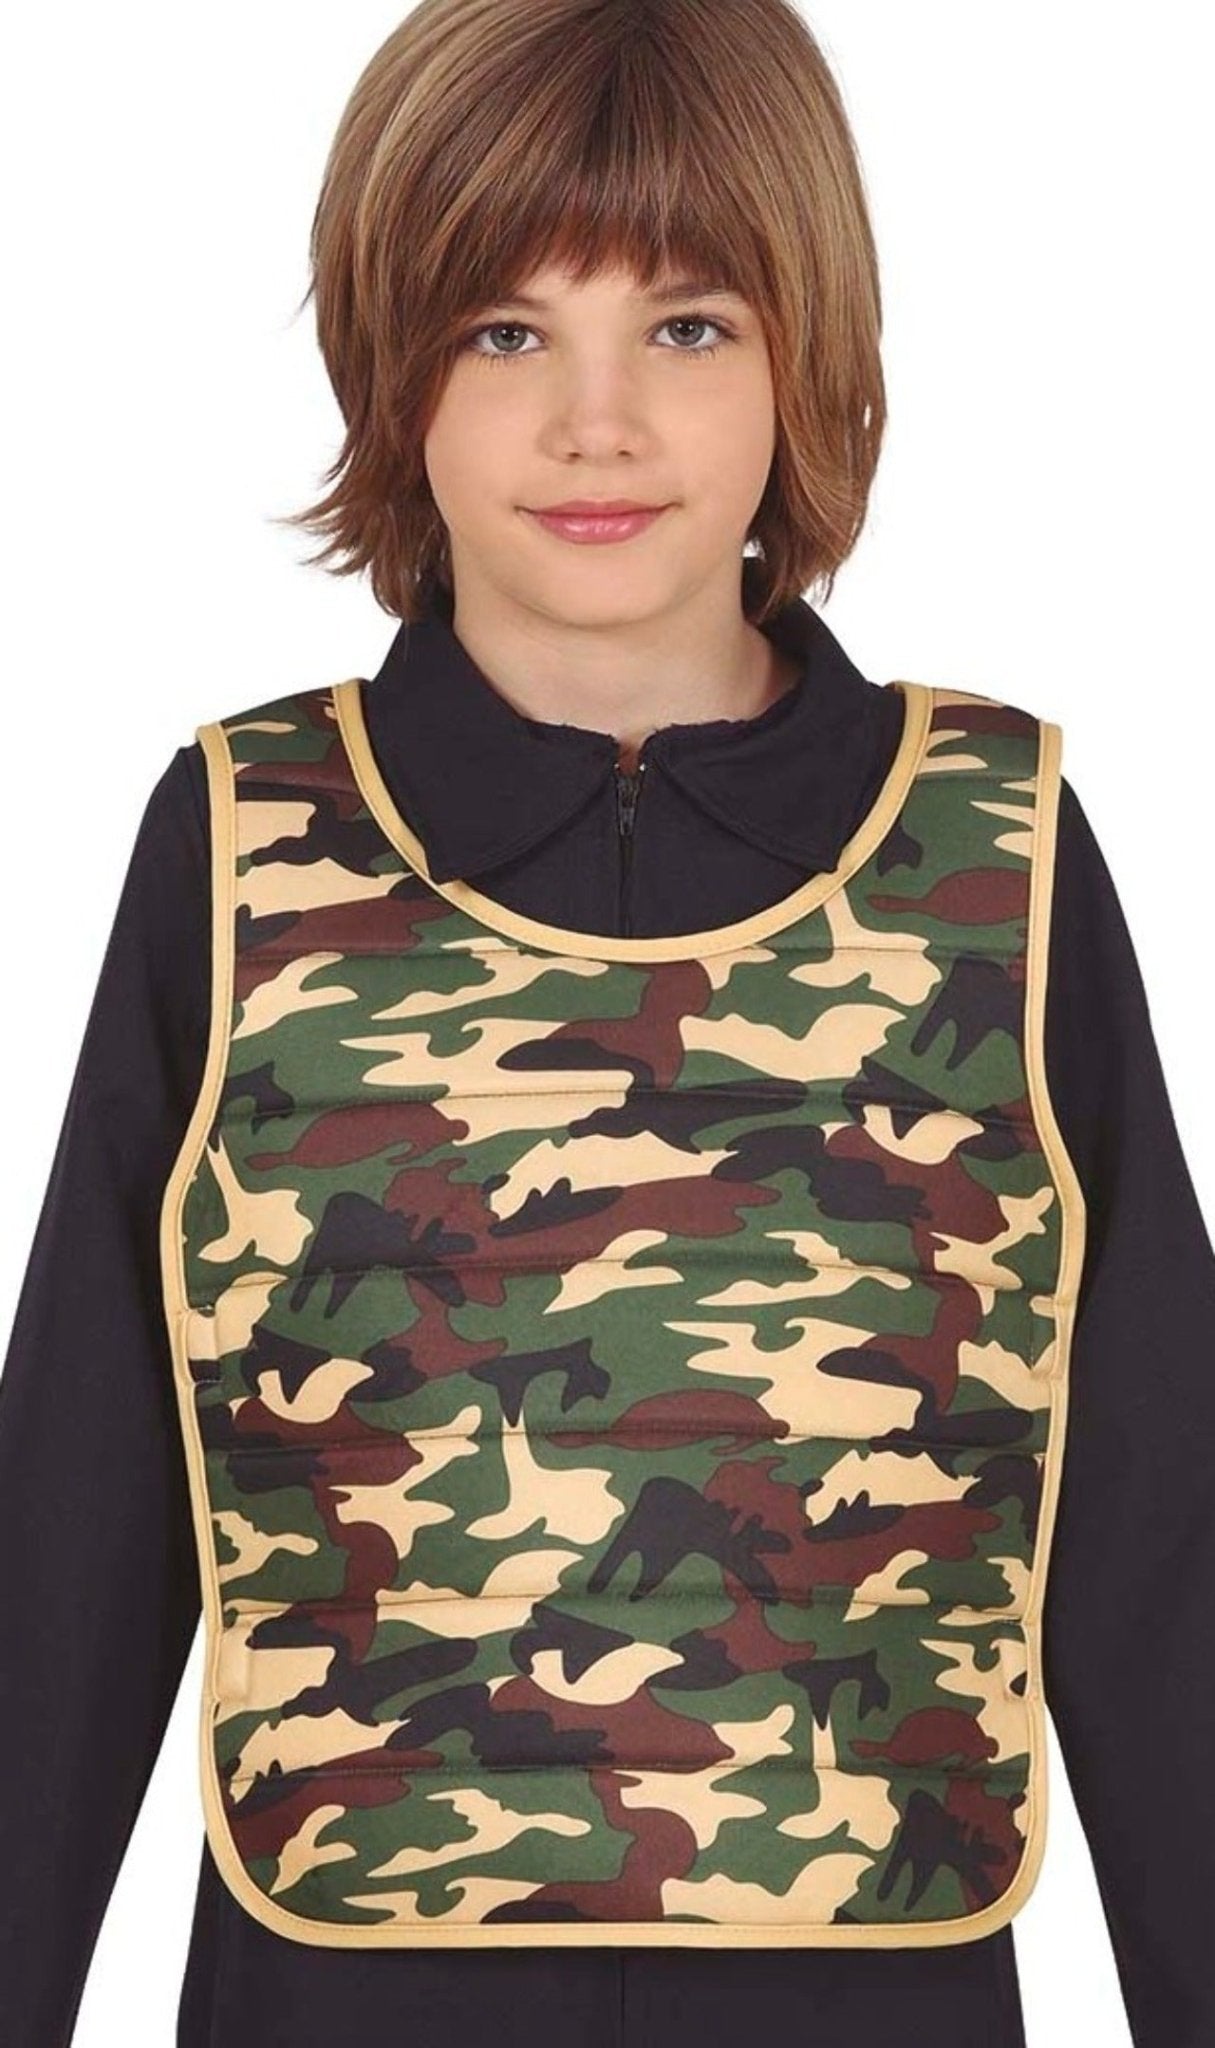 Comprar online Chaleco de Militar Camuflaje infantil